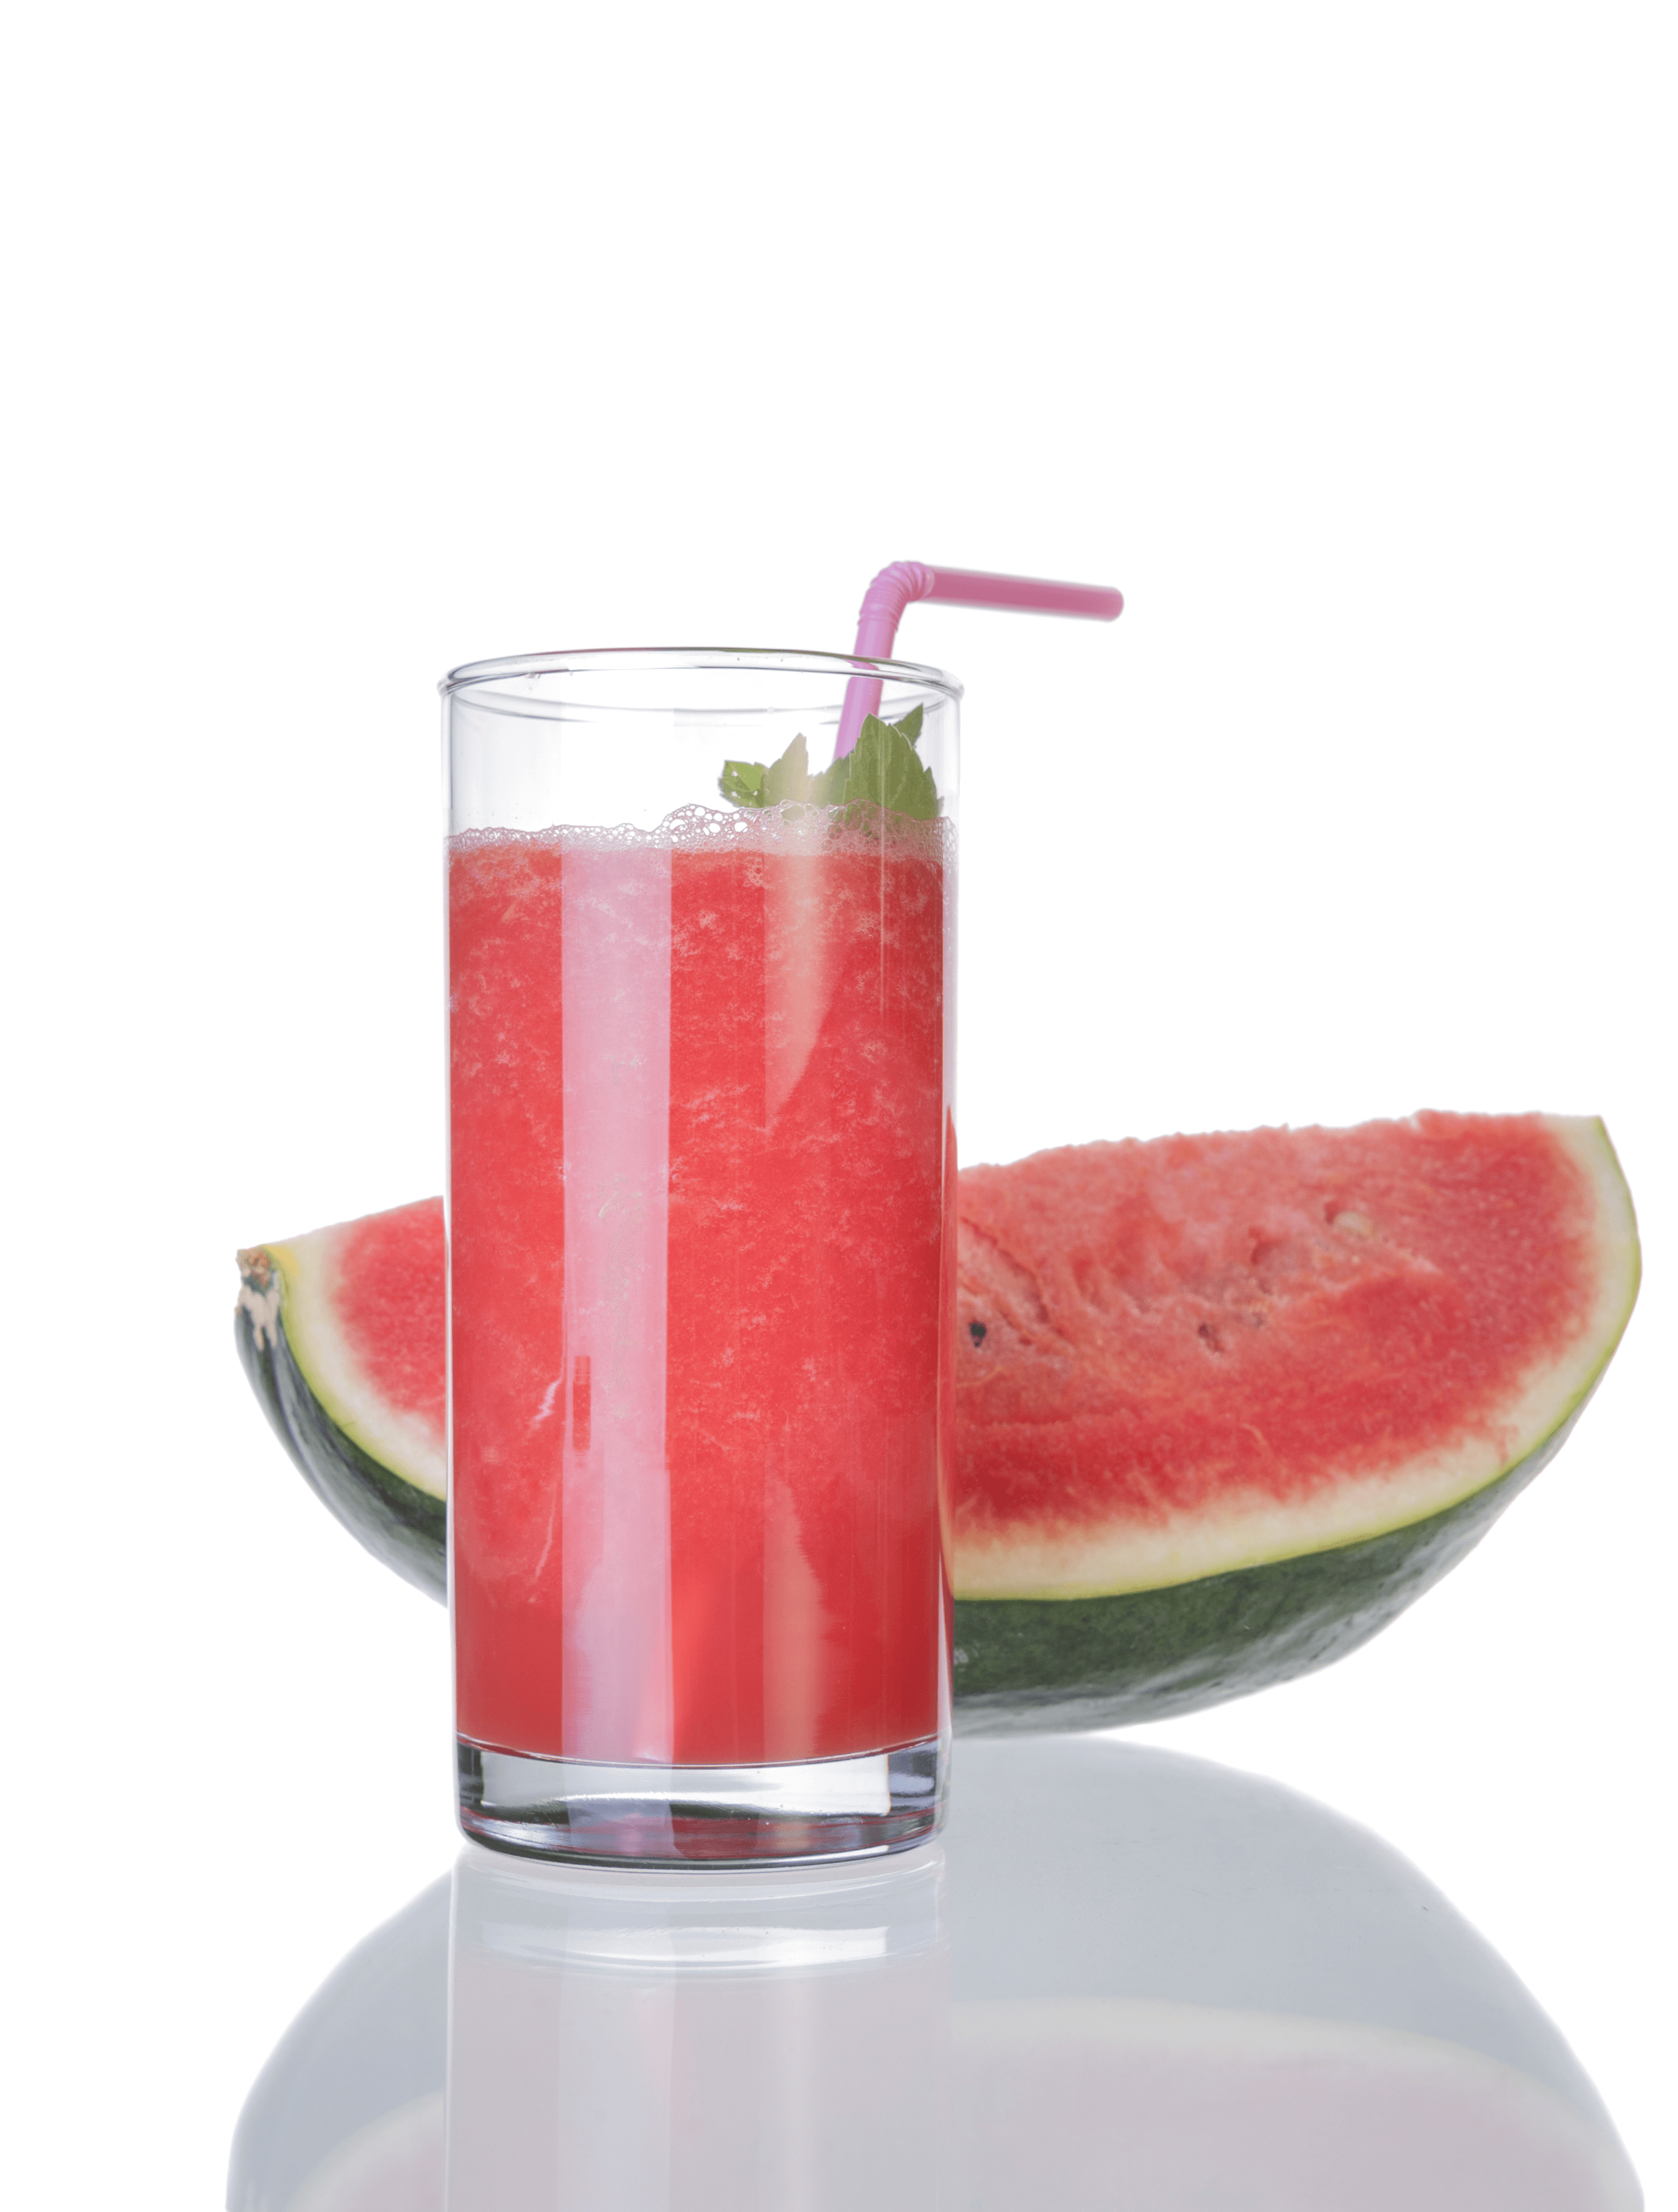 Simple Recipe To Make Watermelon Juice At Home Recipe From Gunungsitoli City